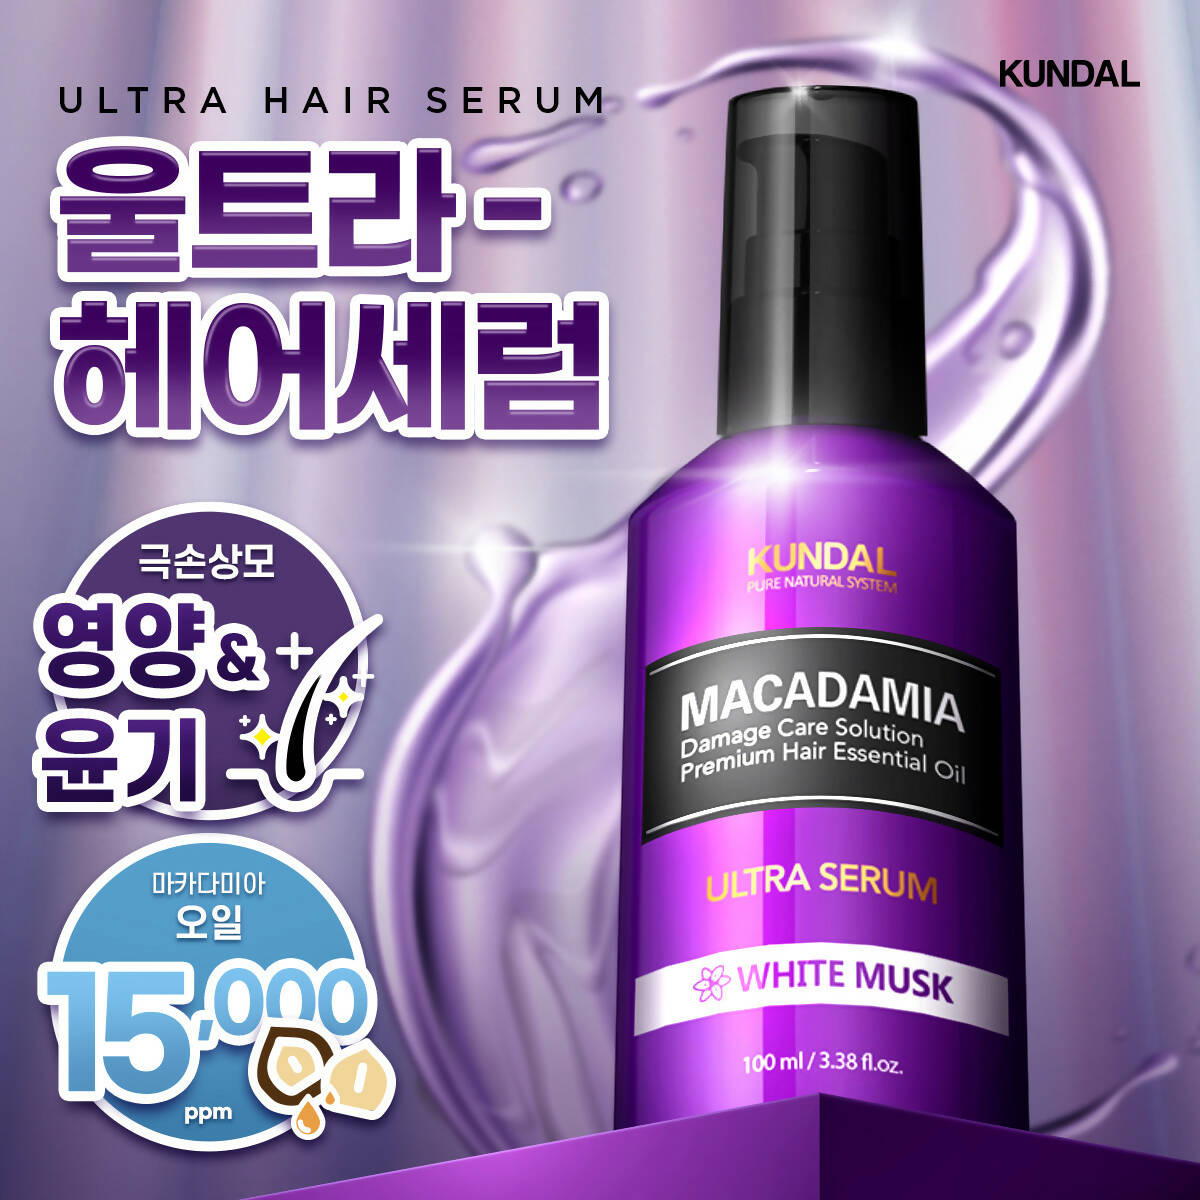 0314_Kundal-Ultra Hair Serum